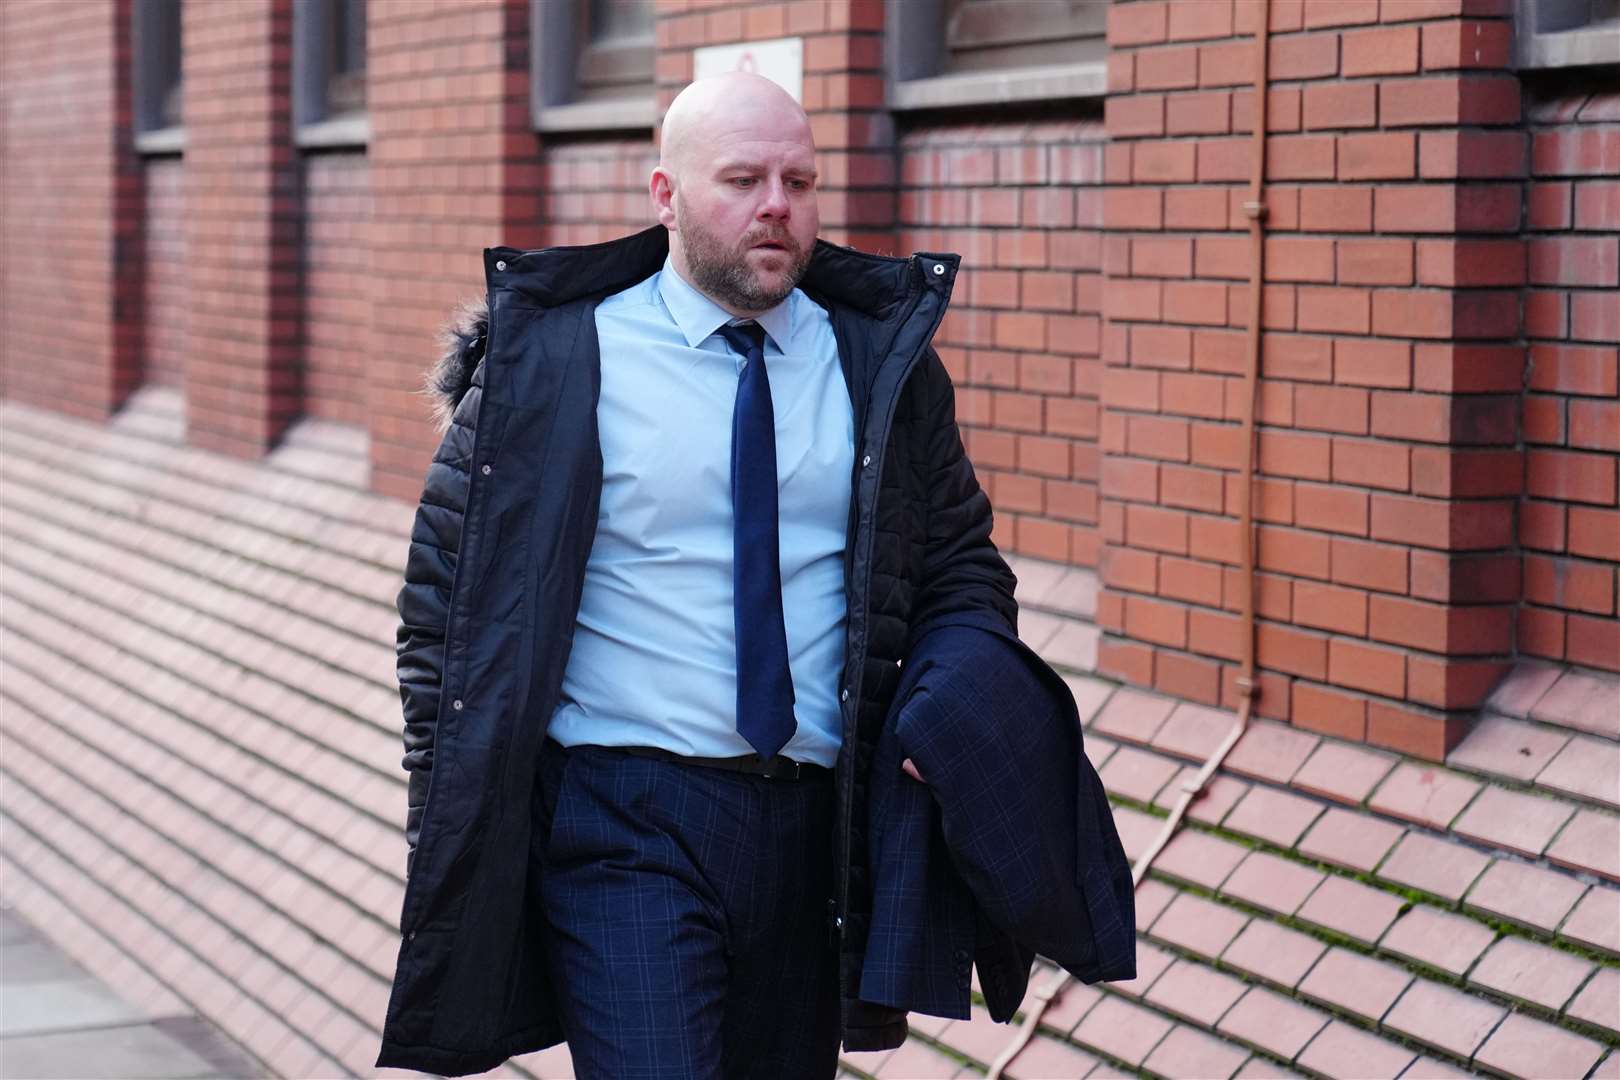 John Woodliff, co-defendant of former MP Jared O’Mara, arrives at Leeds Crown Court (PA)